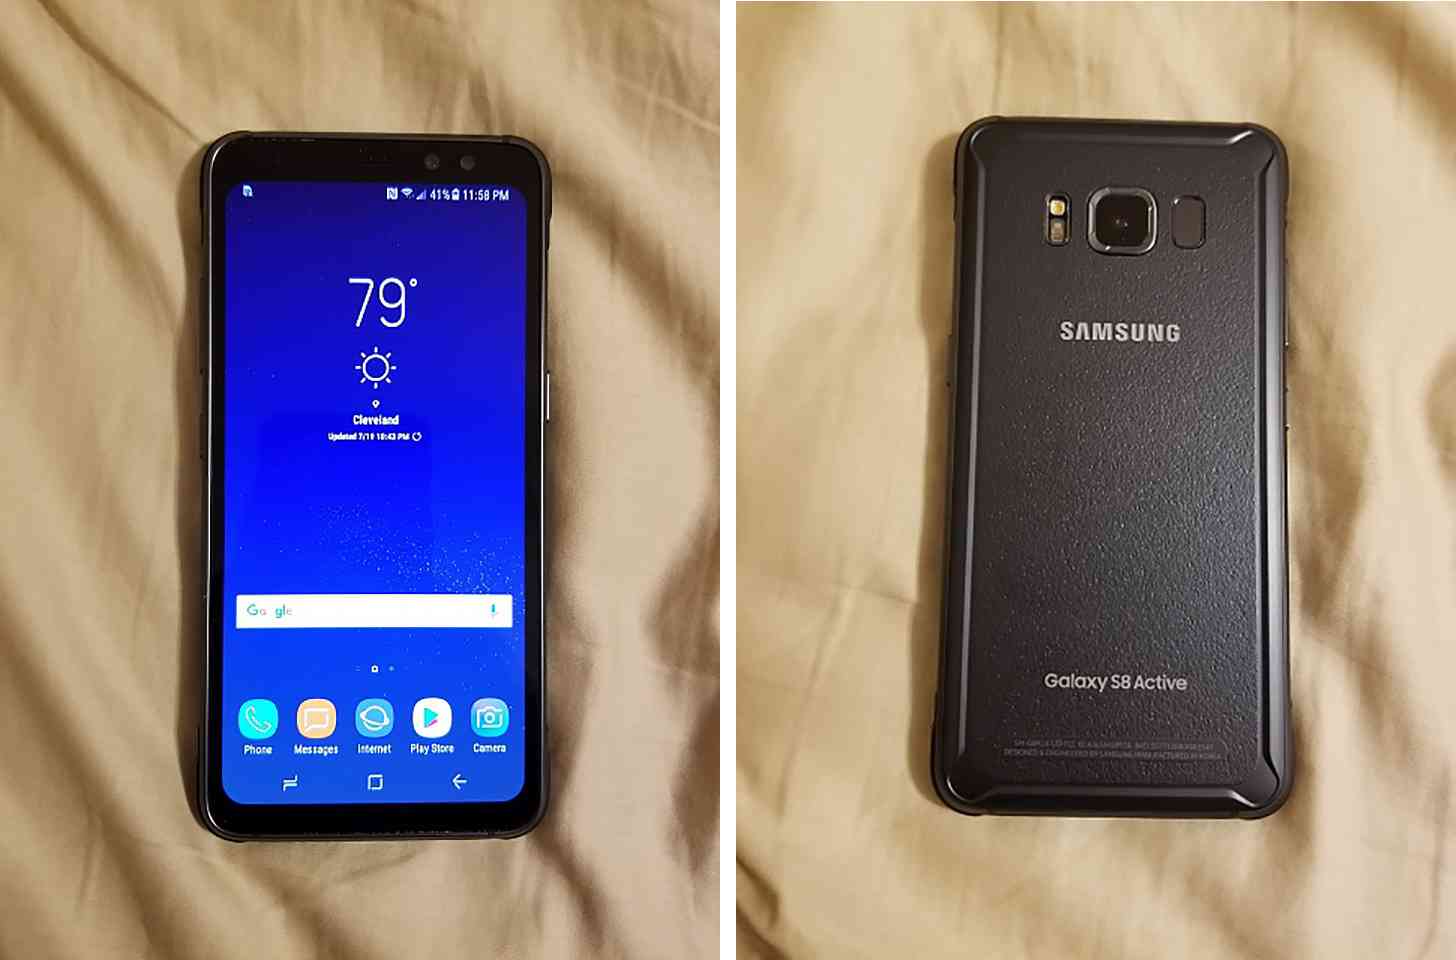 Samsung Galaxy S8 Active photo leak